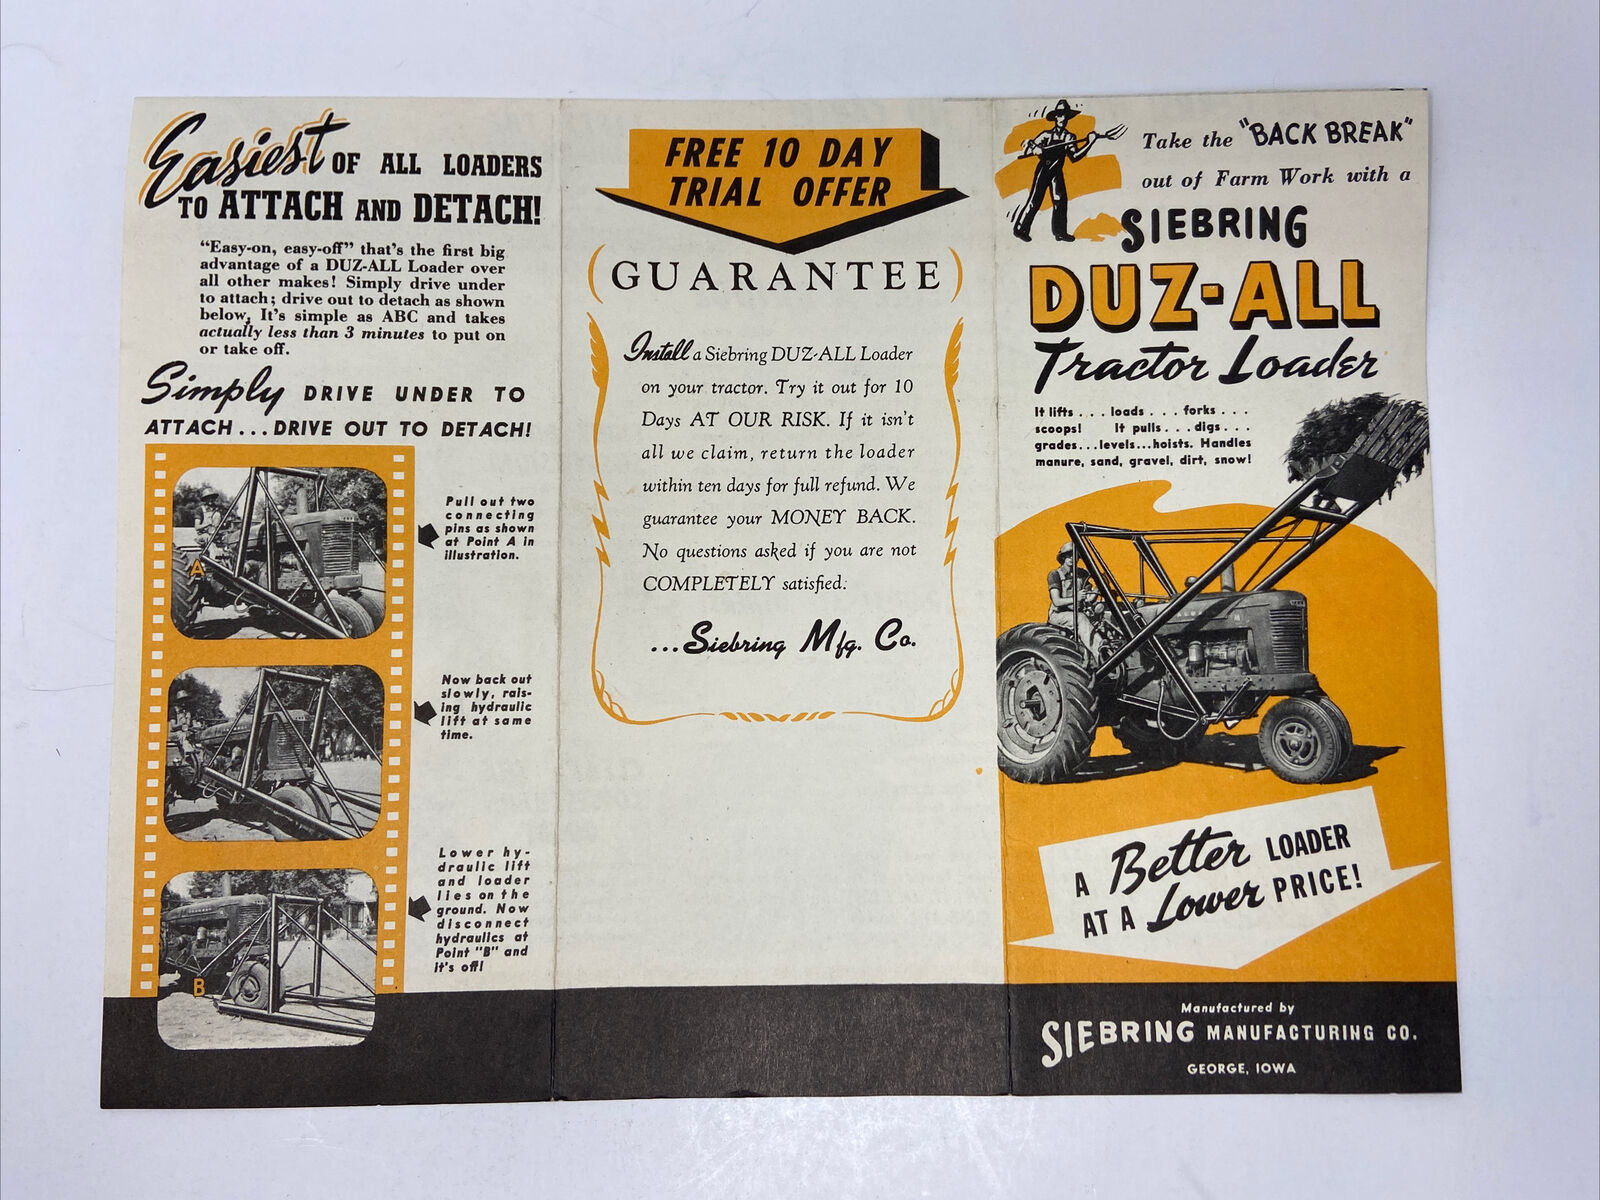 Early Siebring Duz-All Tractor Loader Sales Brochure Advertising Antique Photos